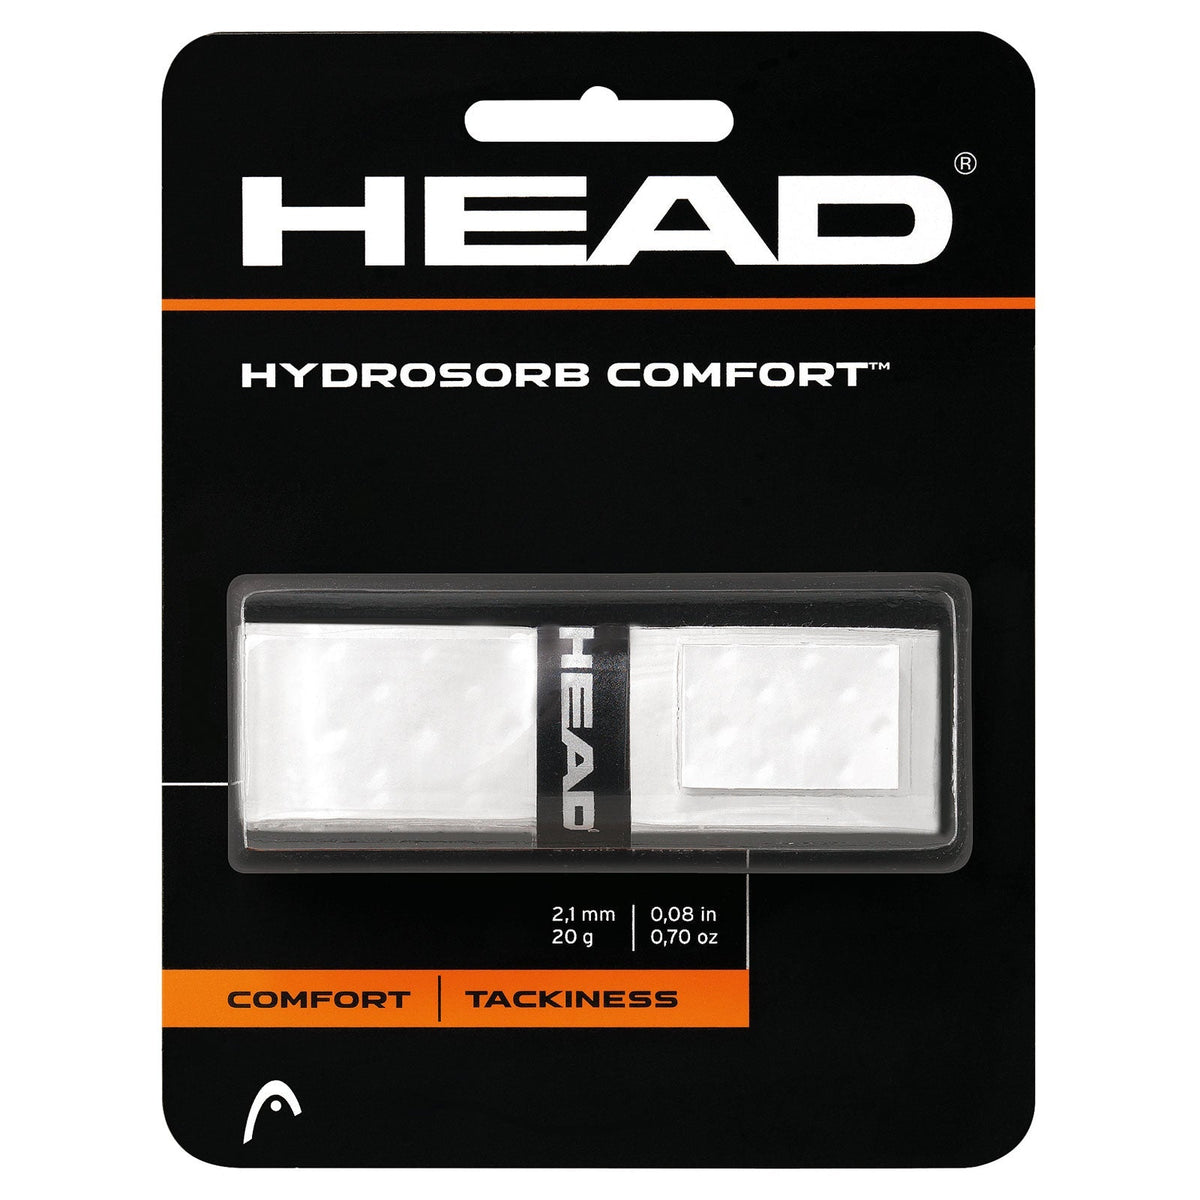 Head Hydrosorb Comfort